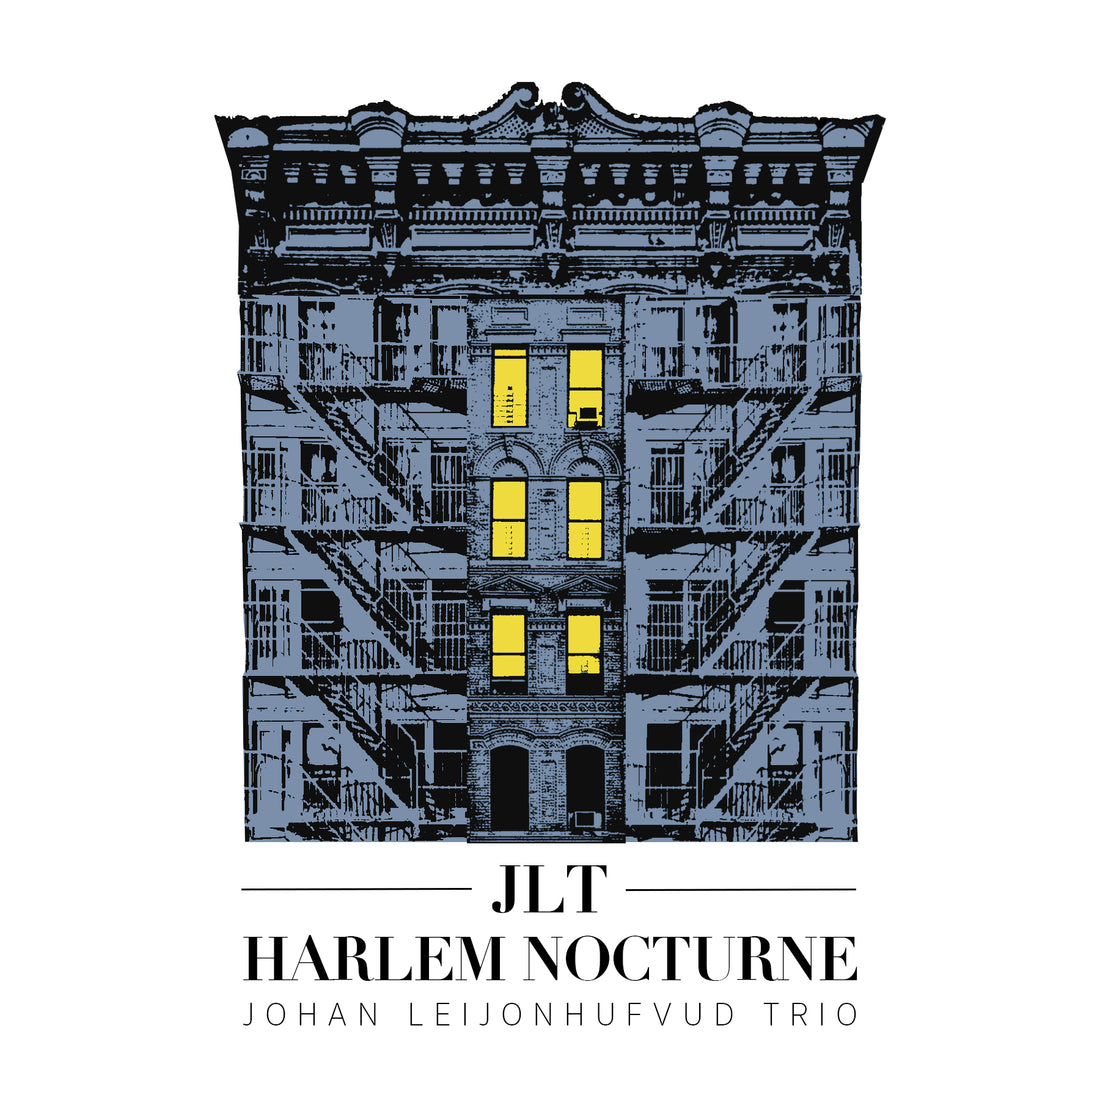 Heartcore Records Releases “Harlem Nocturne” by JLT (Johan Leijonhufvud Trio)